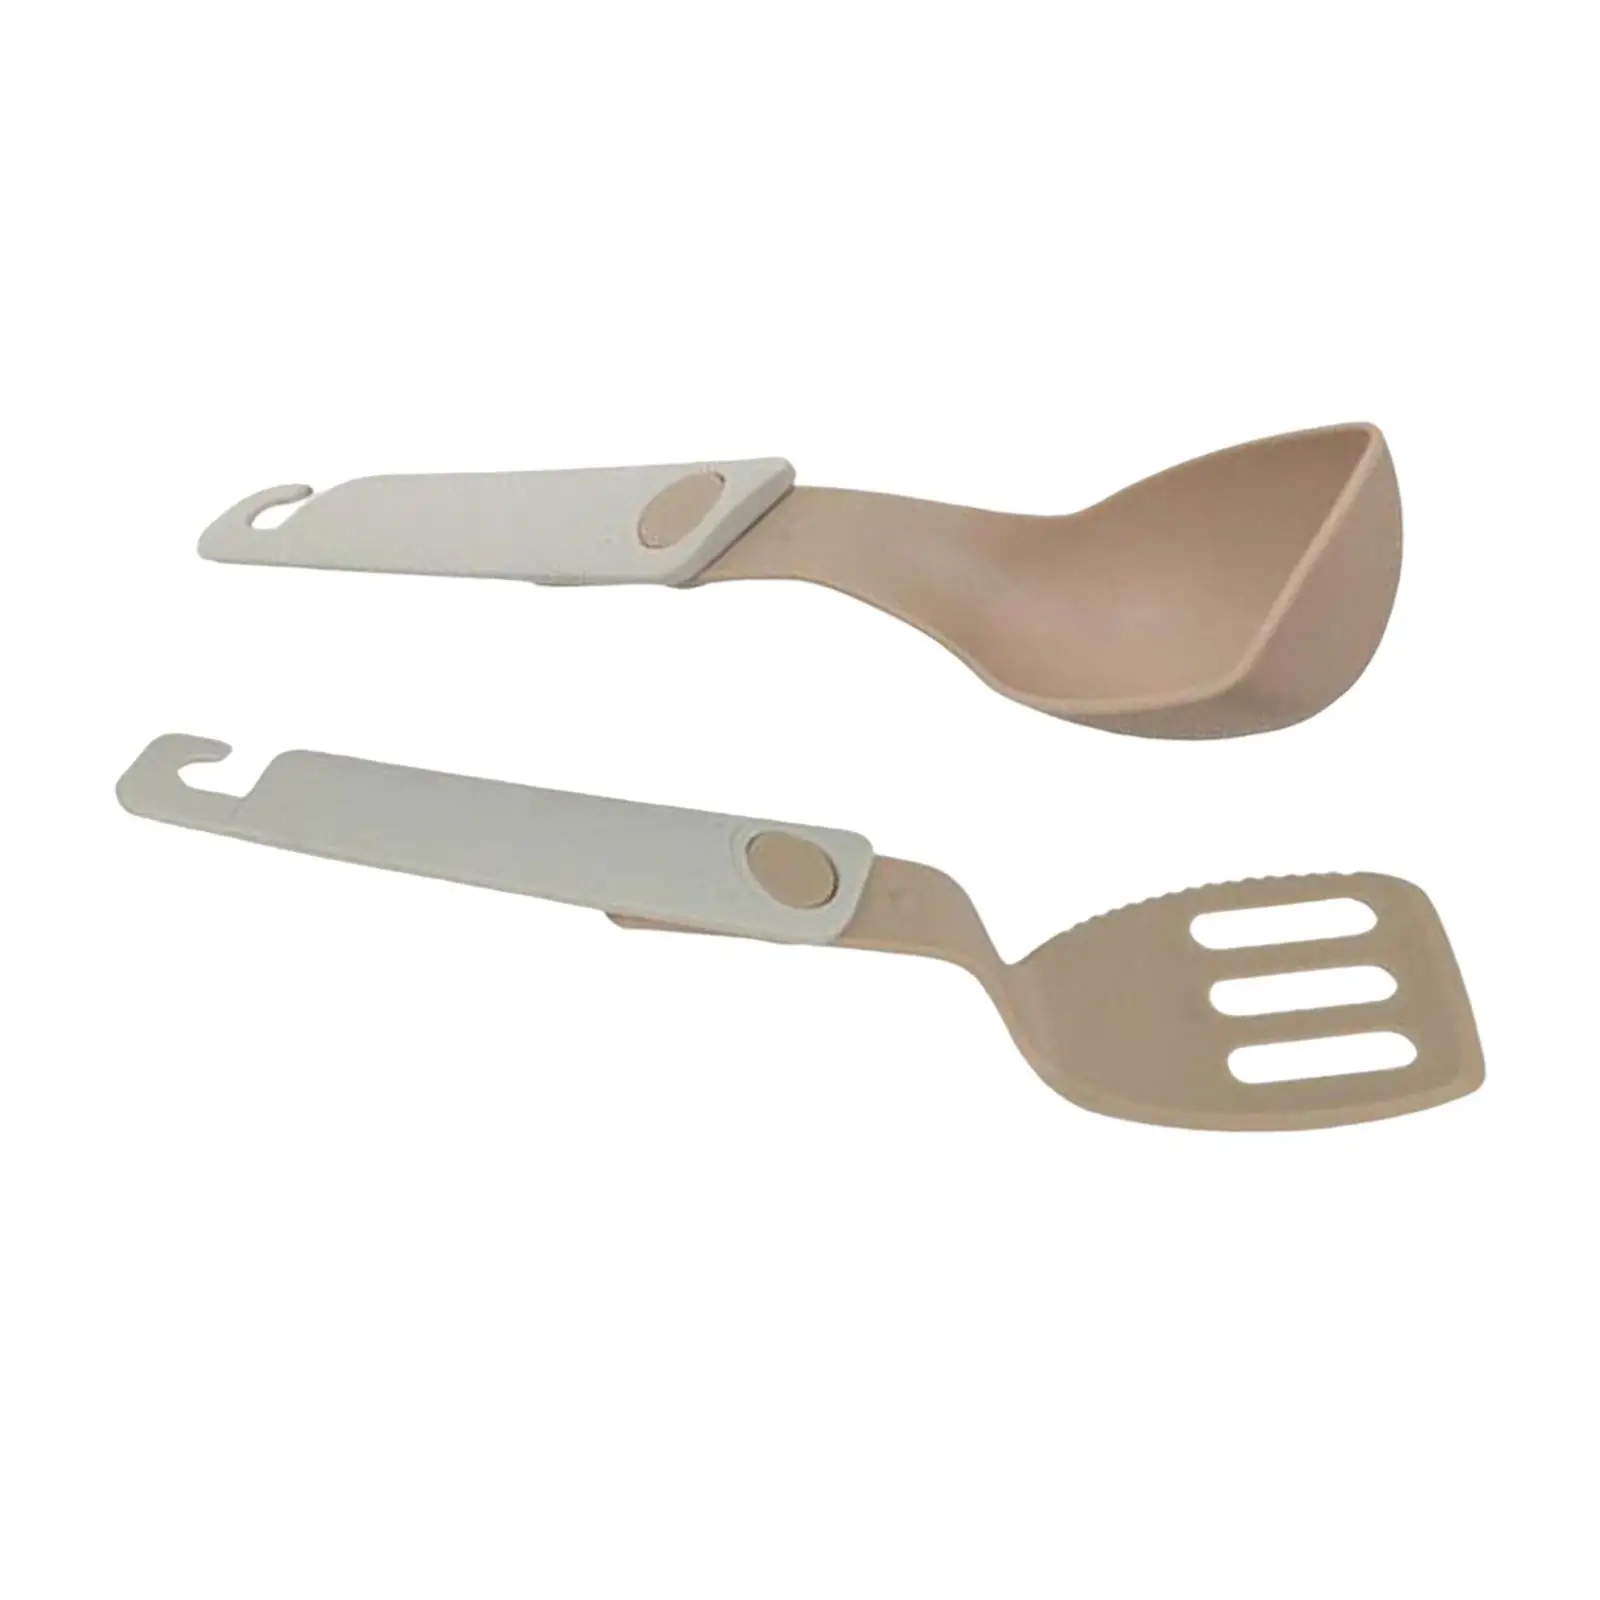 2x Camping Cooking Spoon Shovel Folding Kitchen Utensils Tableware Deep Soup